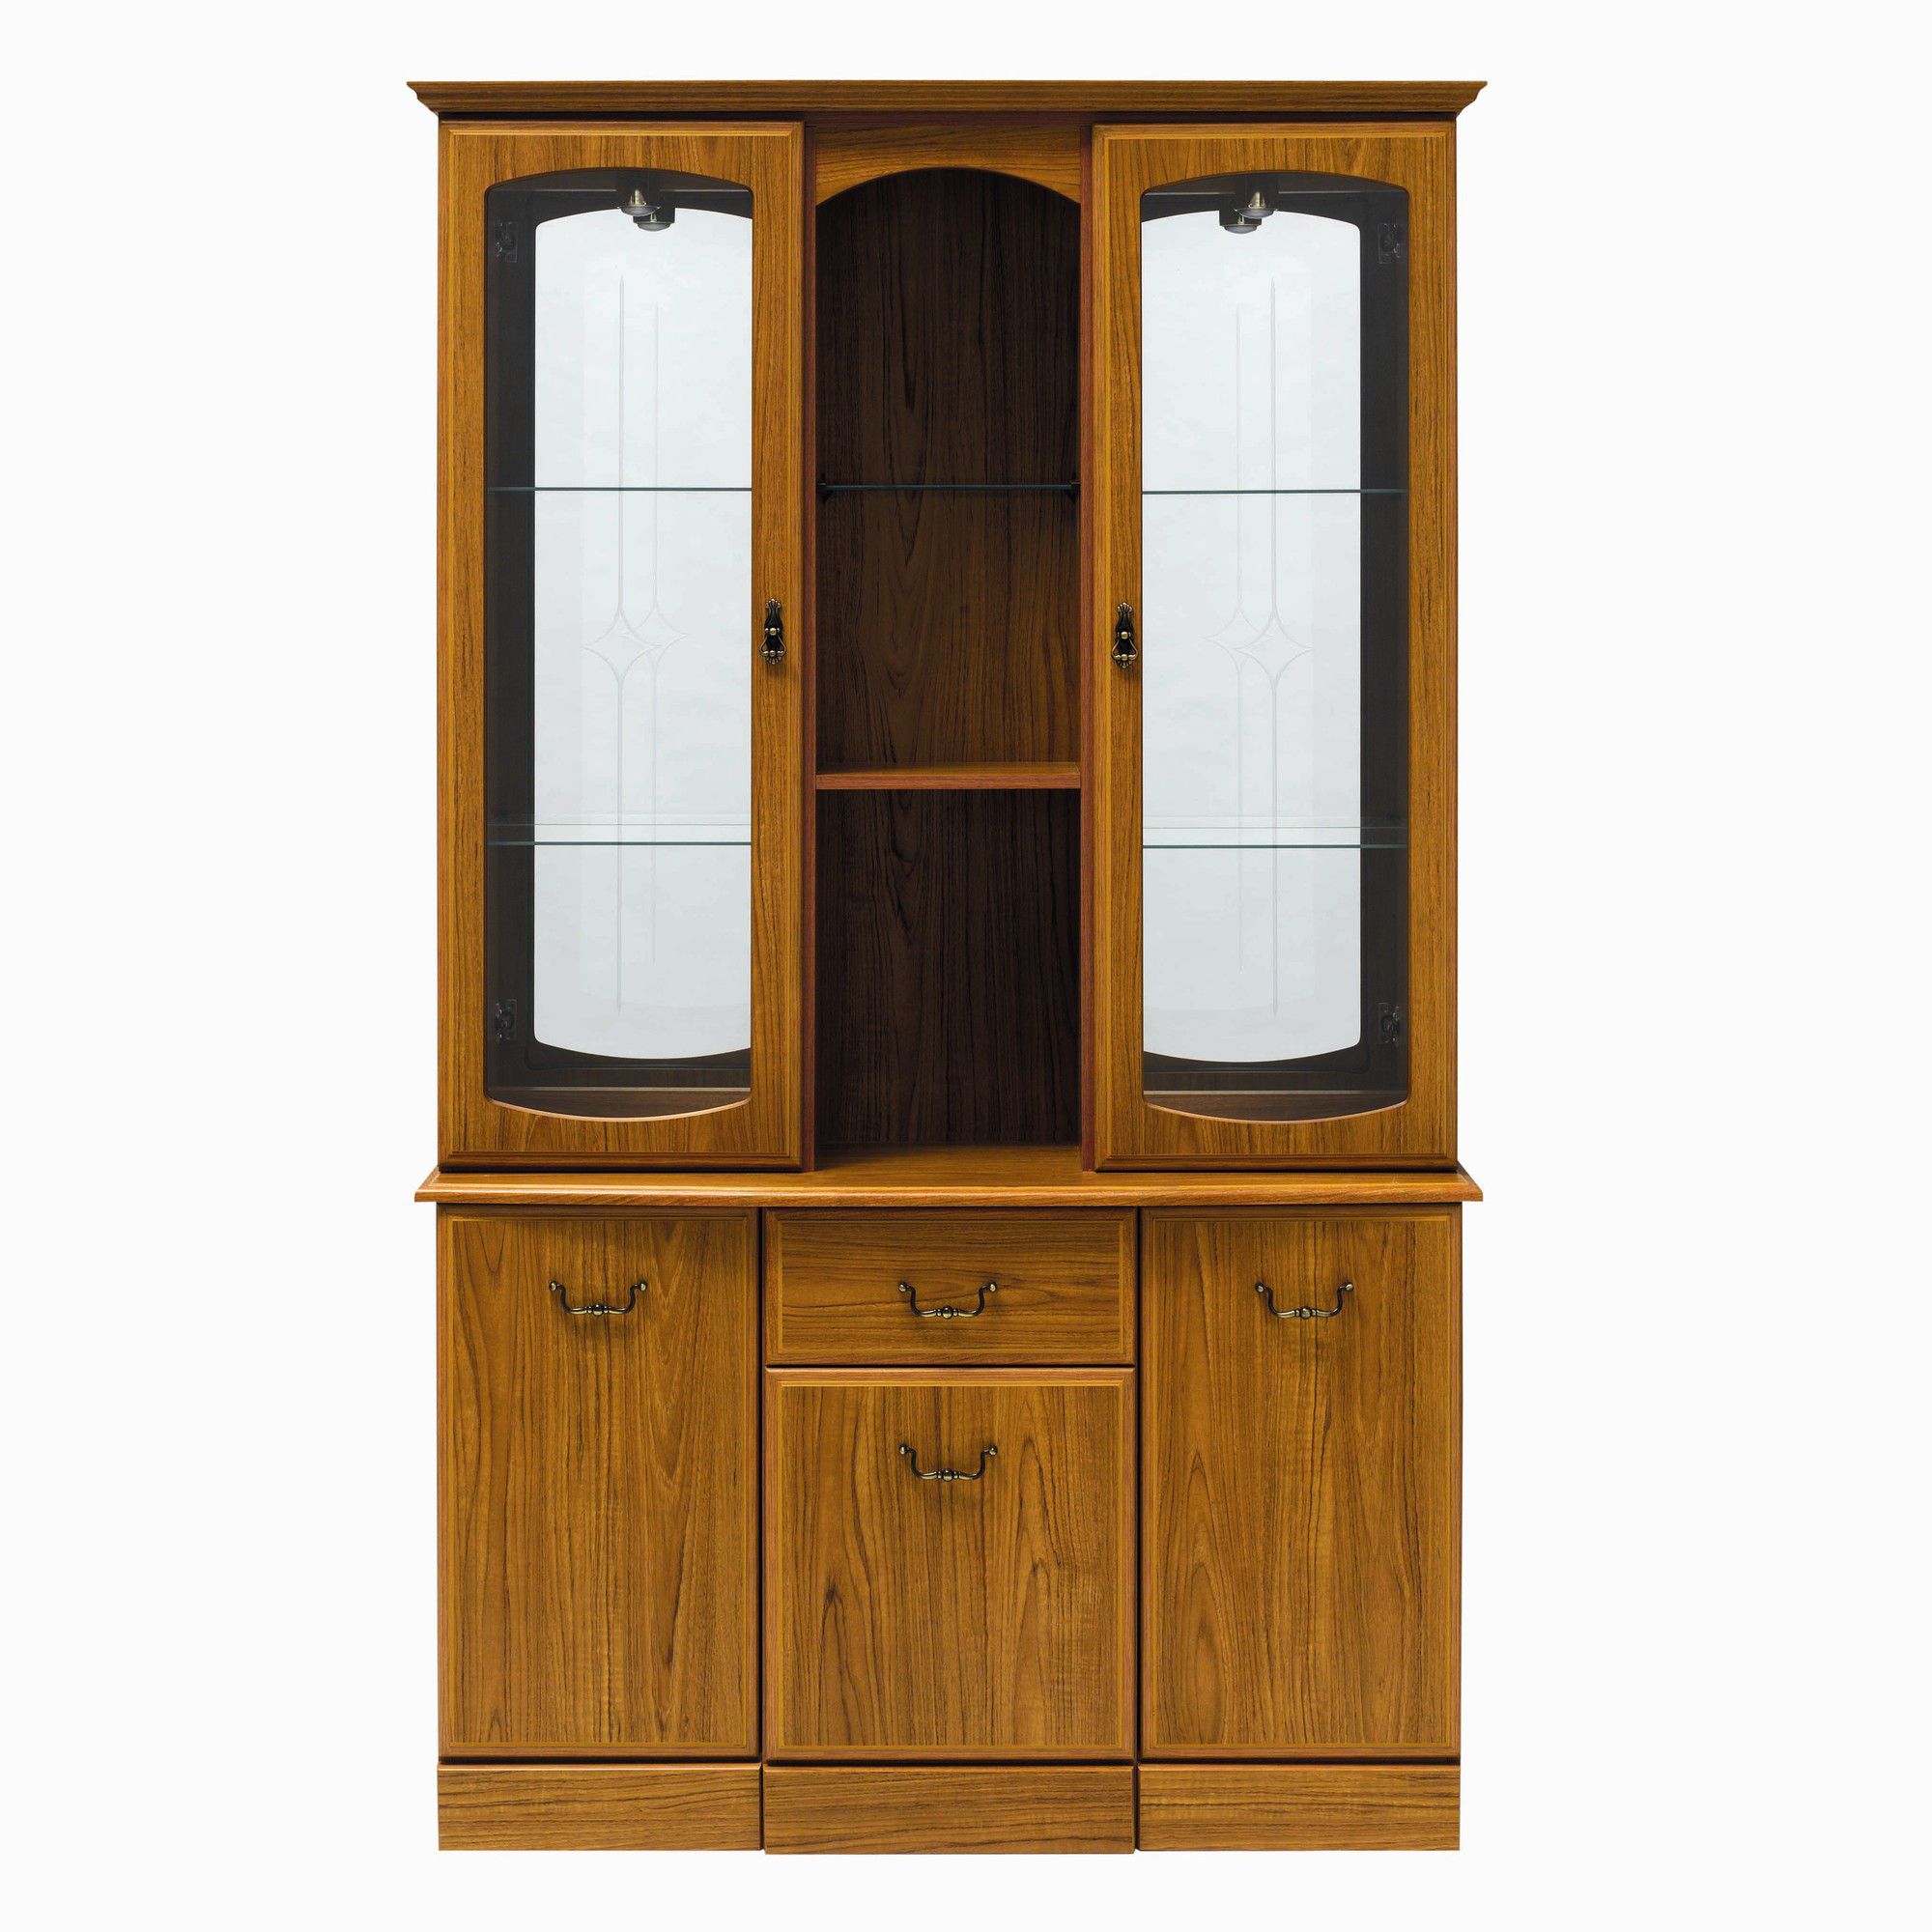 Caxton Tennyson 122 cm Display Cabinet in Teak at Tesco Direct